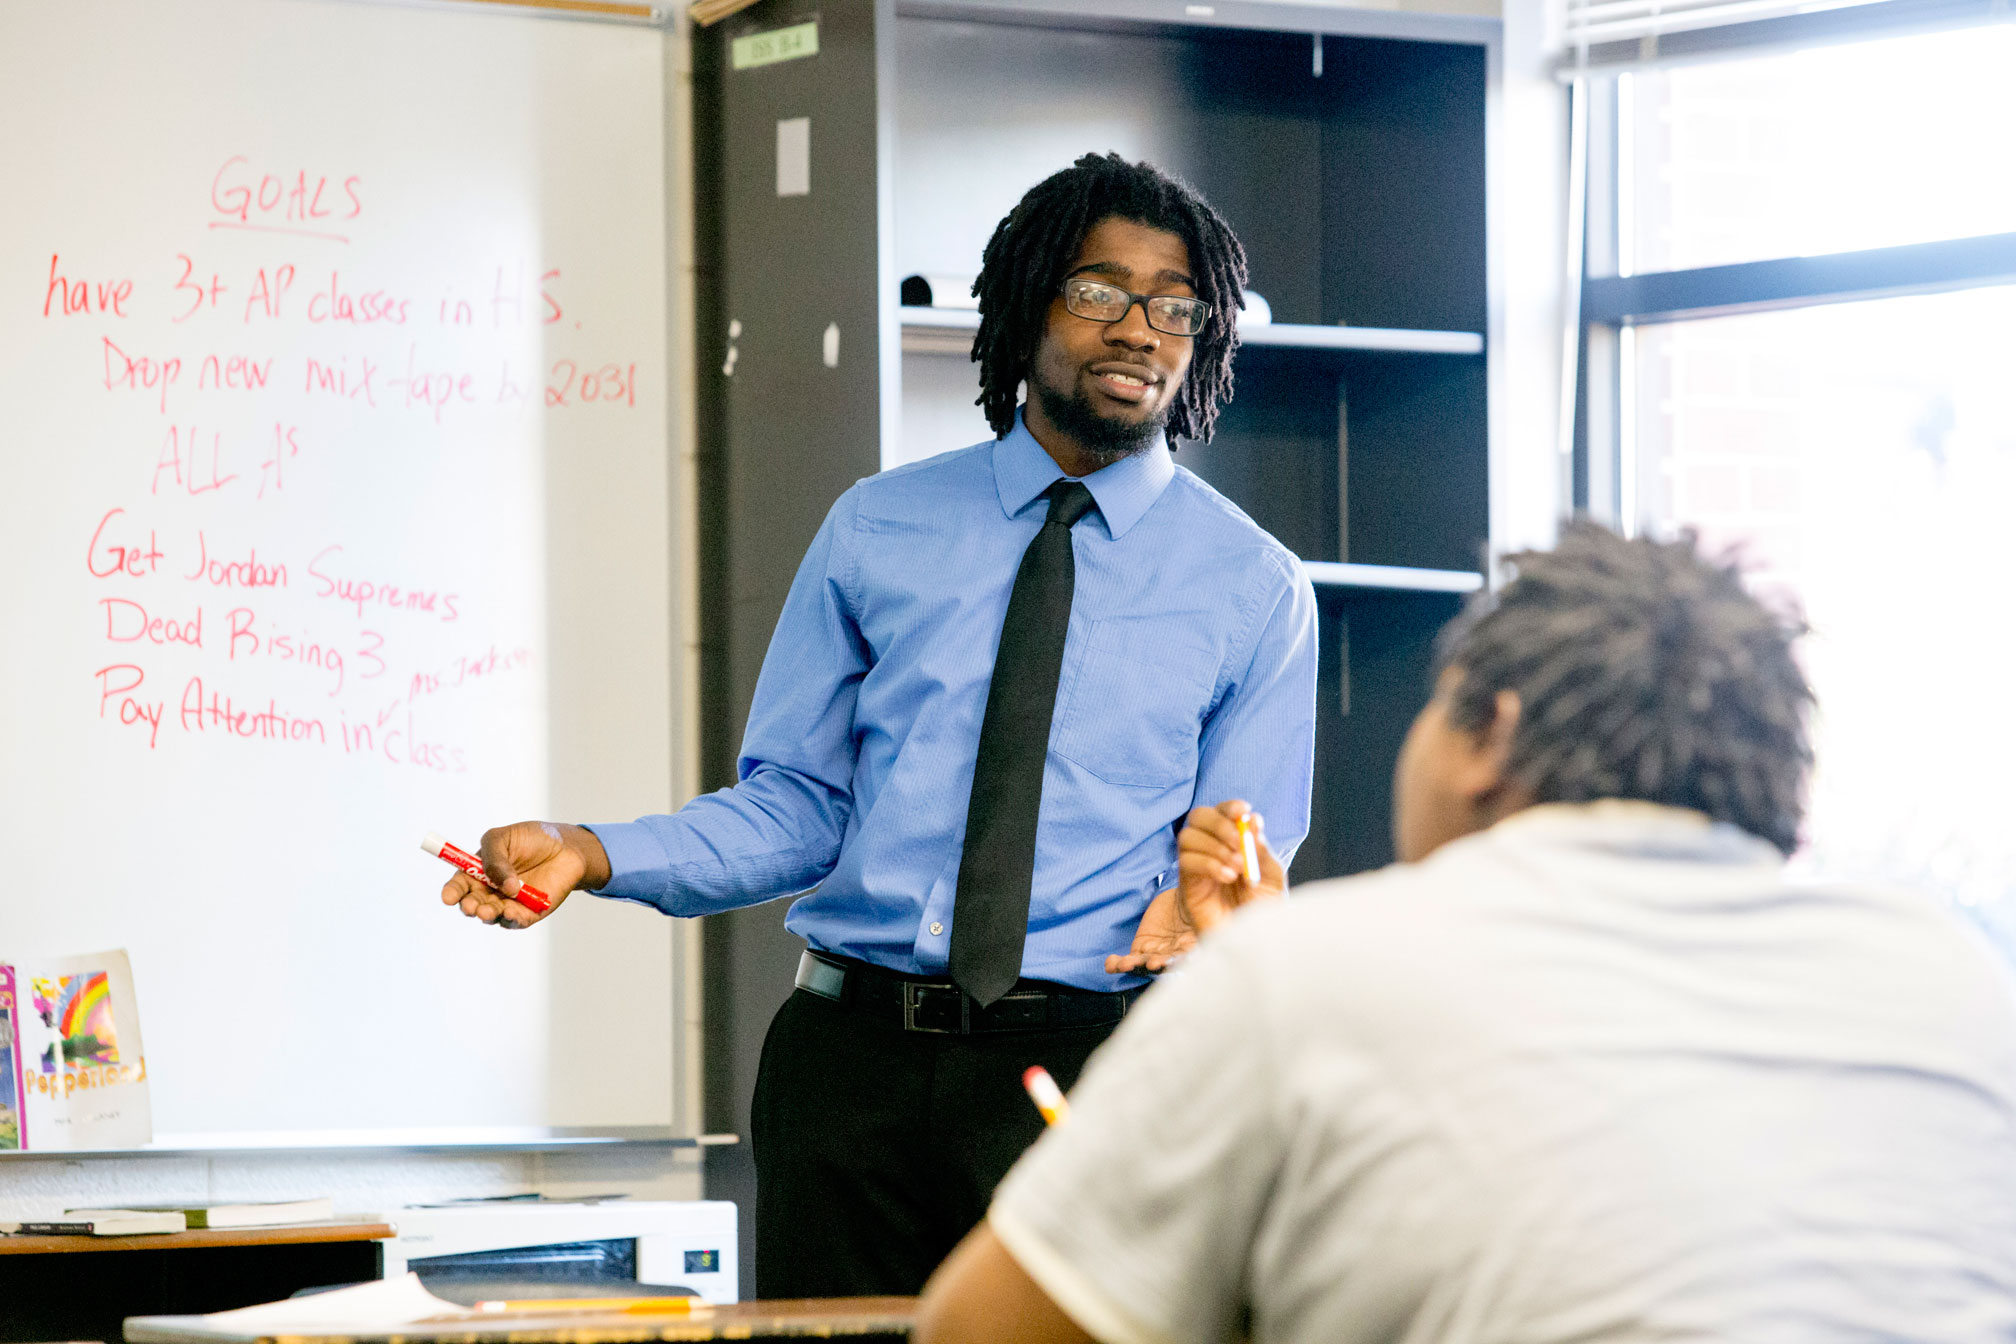 MANSUR’S MANIFESTO: HOW AN ASPIRING BLACK MALE TEACHER PLANS TO TURN TEACHING INTO ...